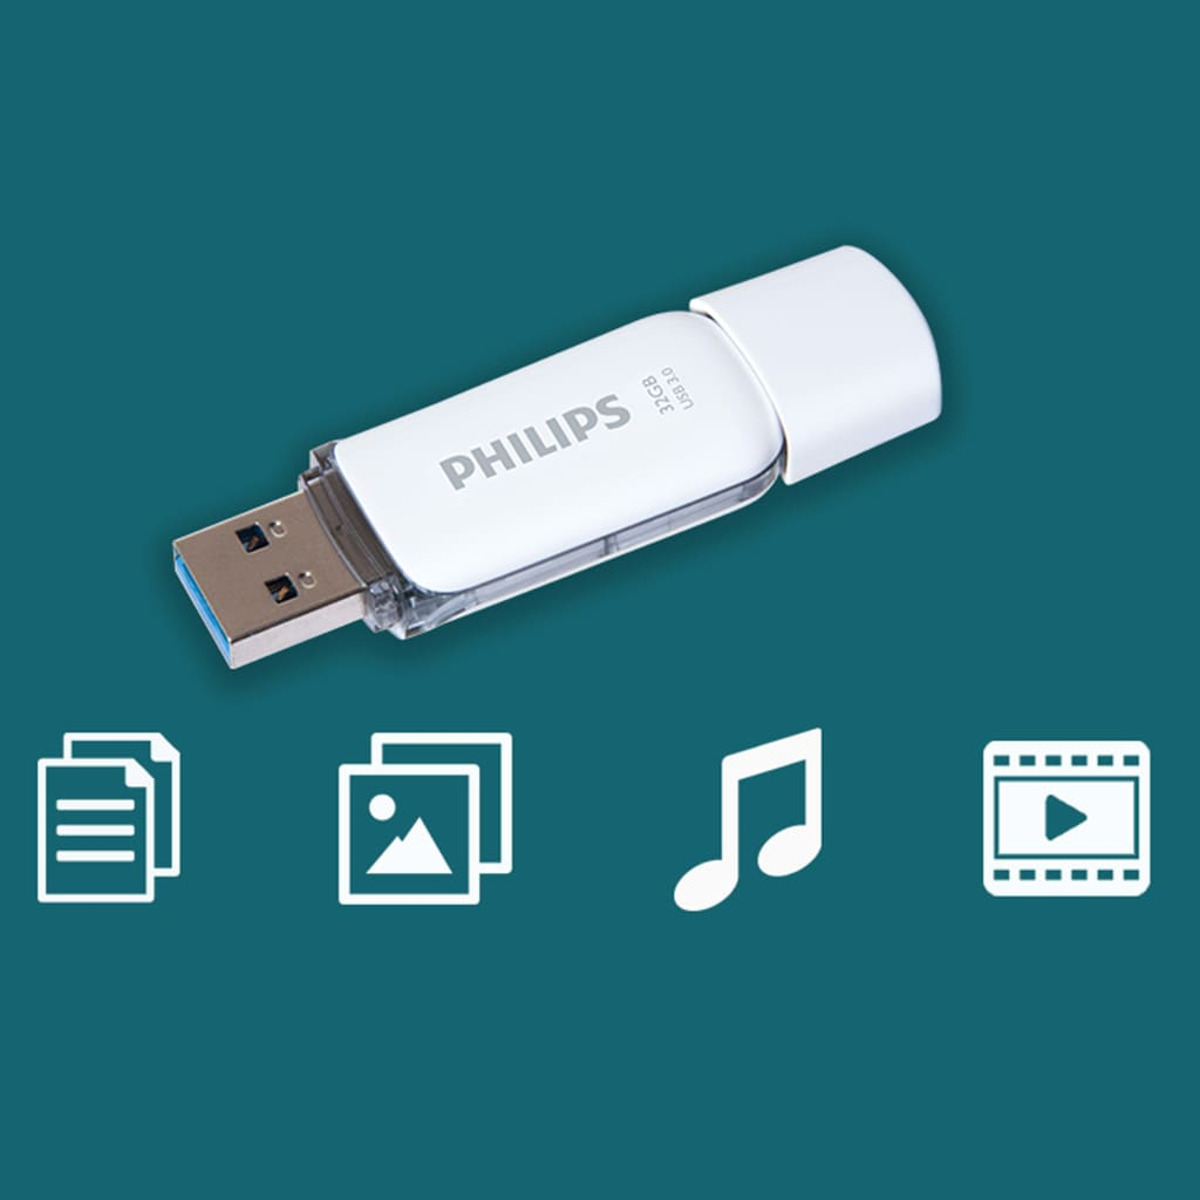 433986 und (Weiß Grau, 32 PHILIPS USB-Flashlaufwerk GB)